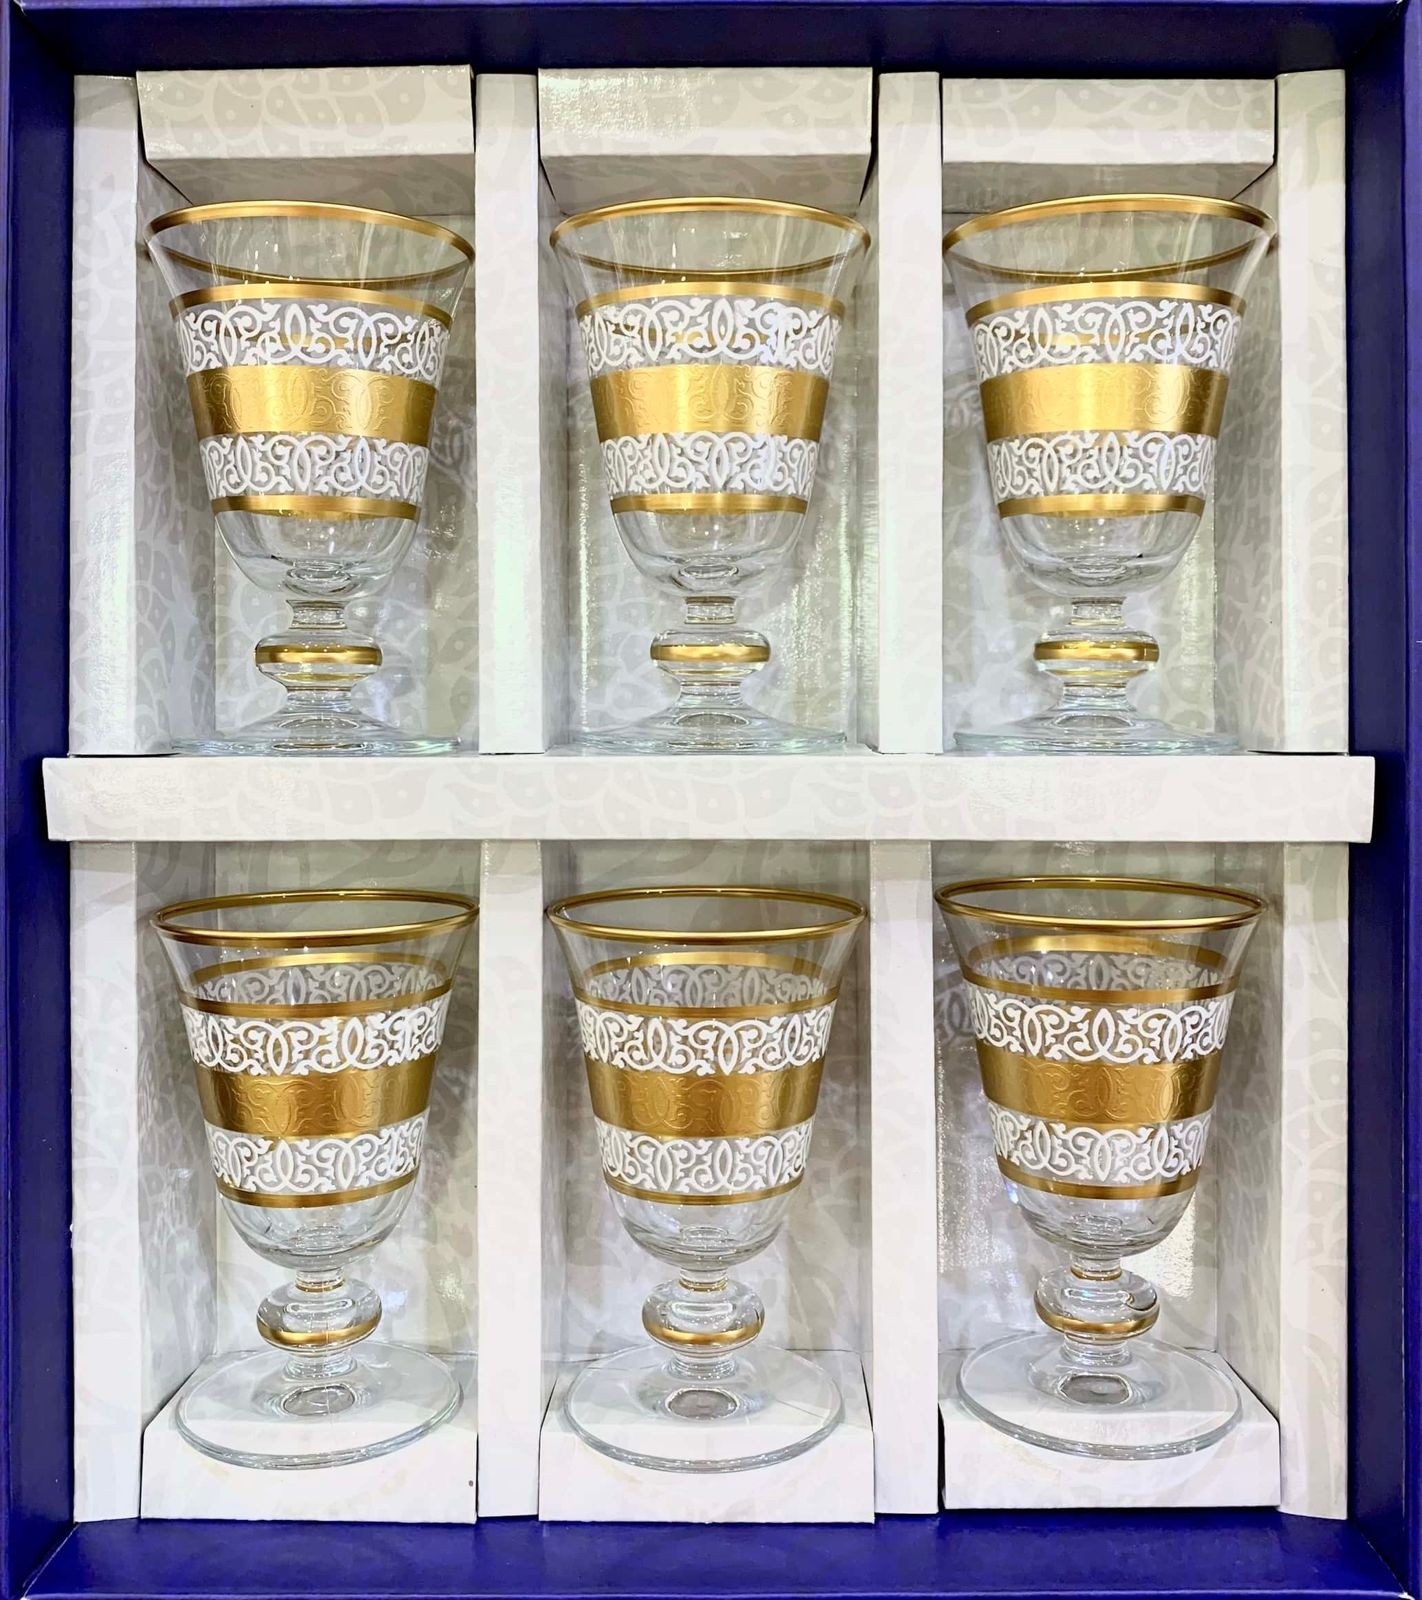 Boîte en verre dorée  Décoration marocaine - Eniamor